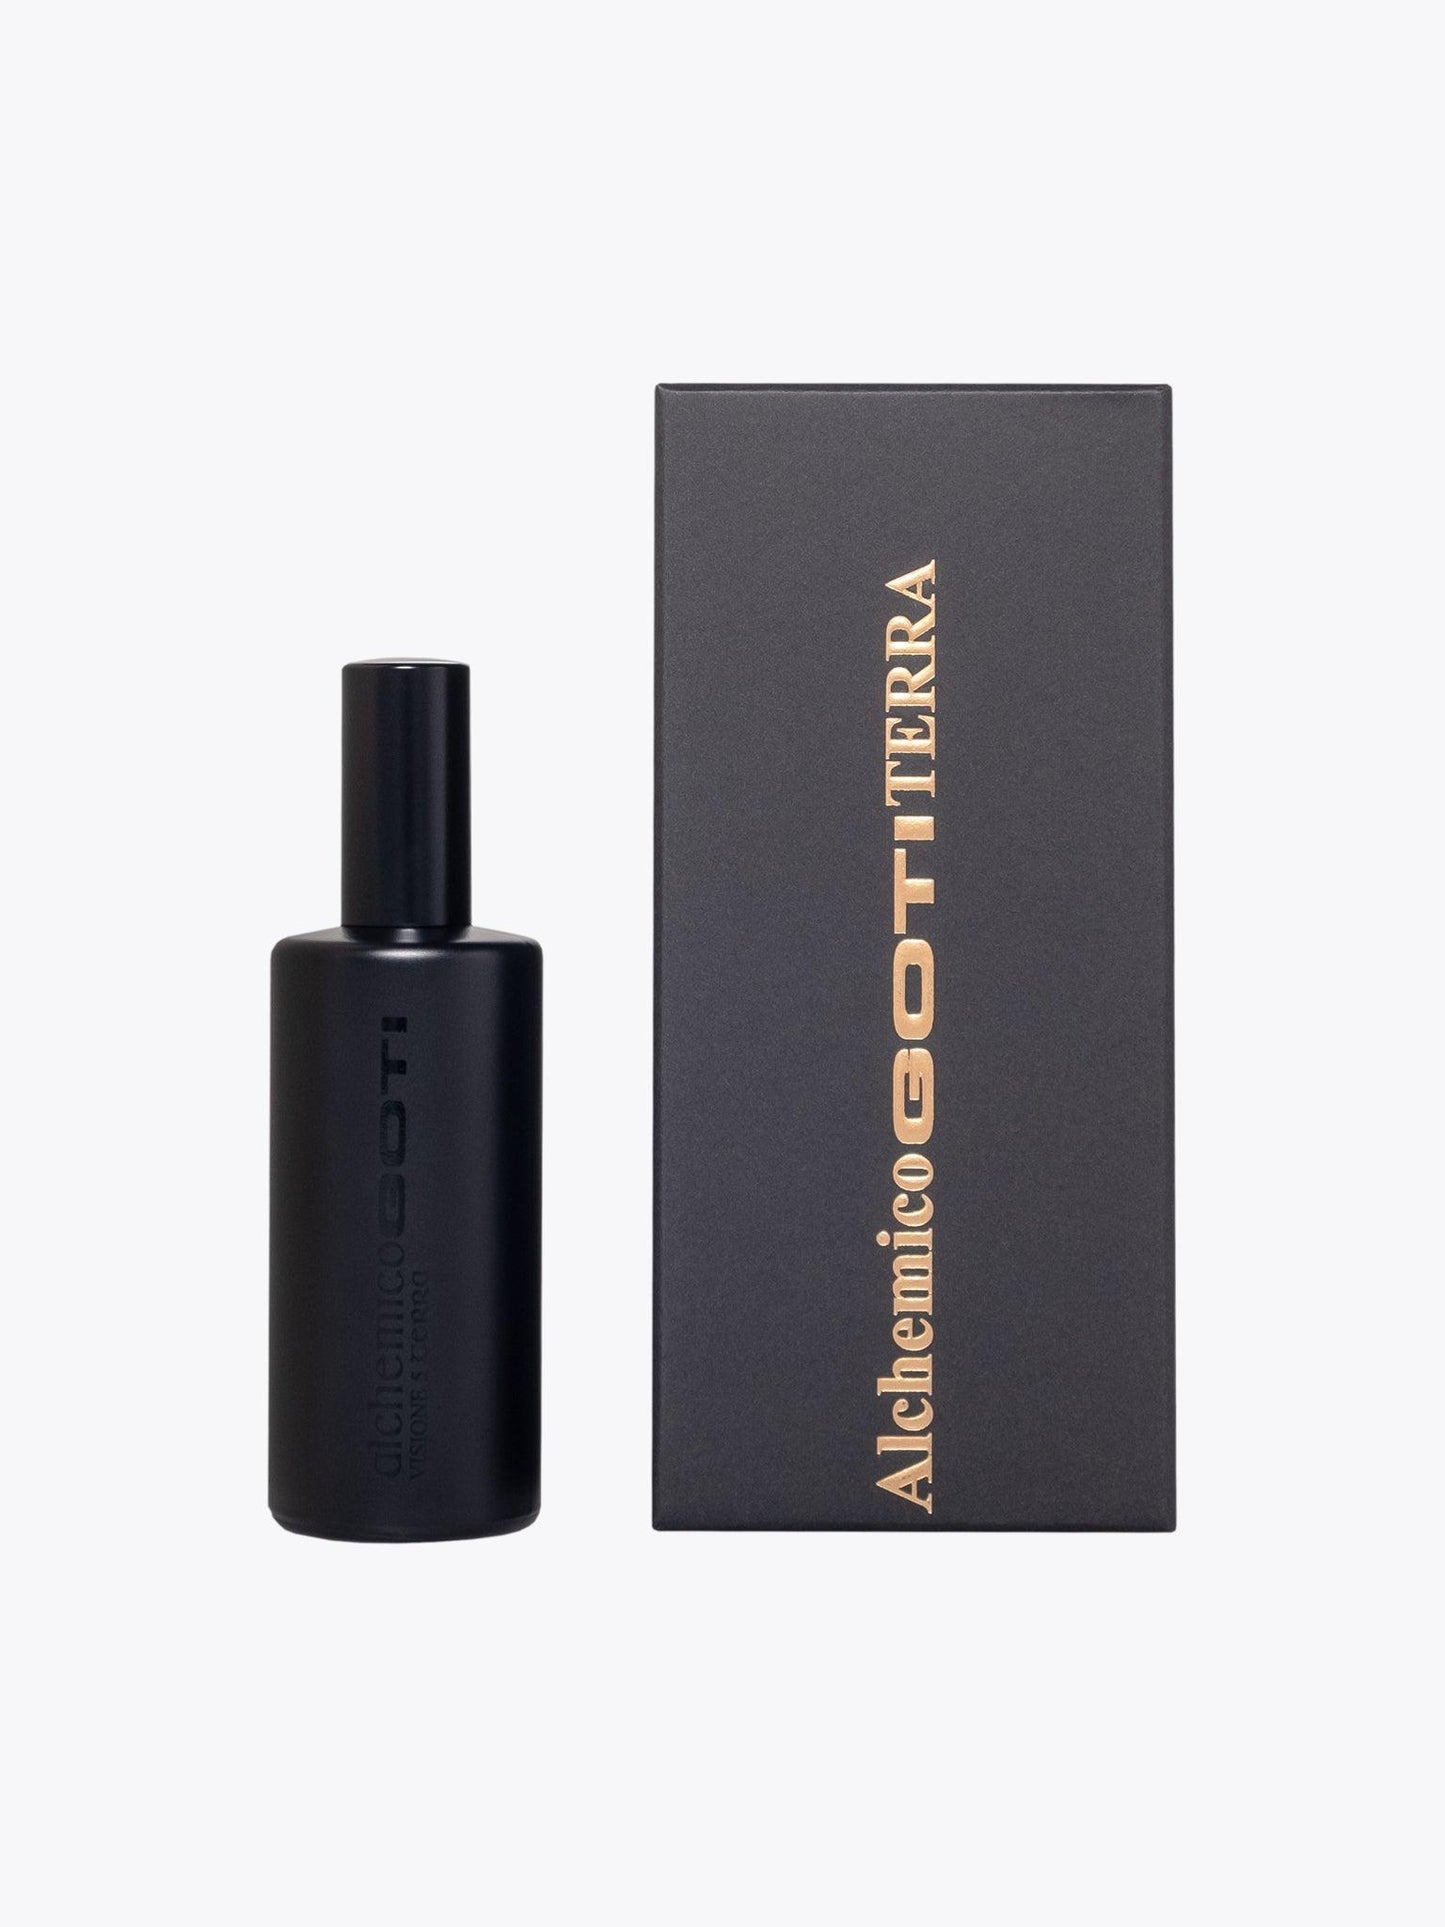 GOTI Terra Alchemico Visione 5 Perfume 100 ml - APODEP.com